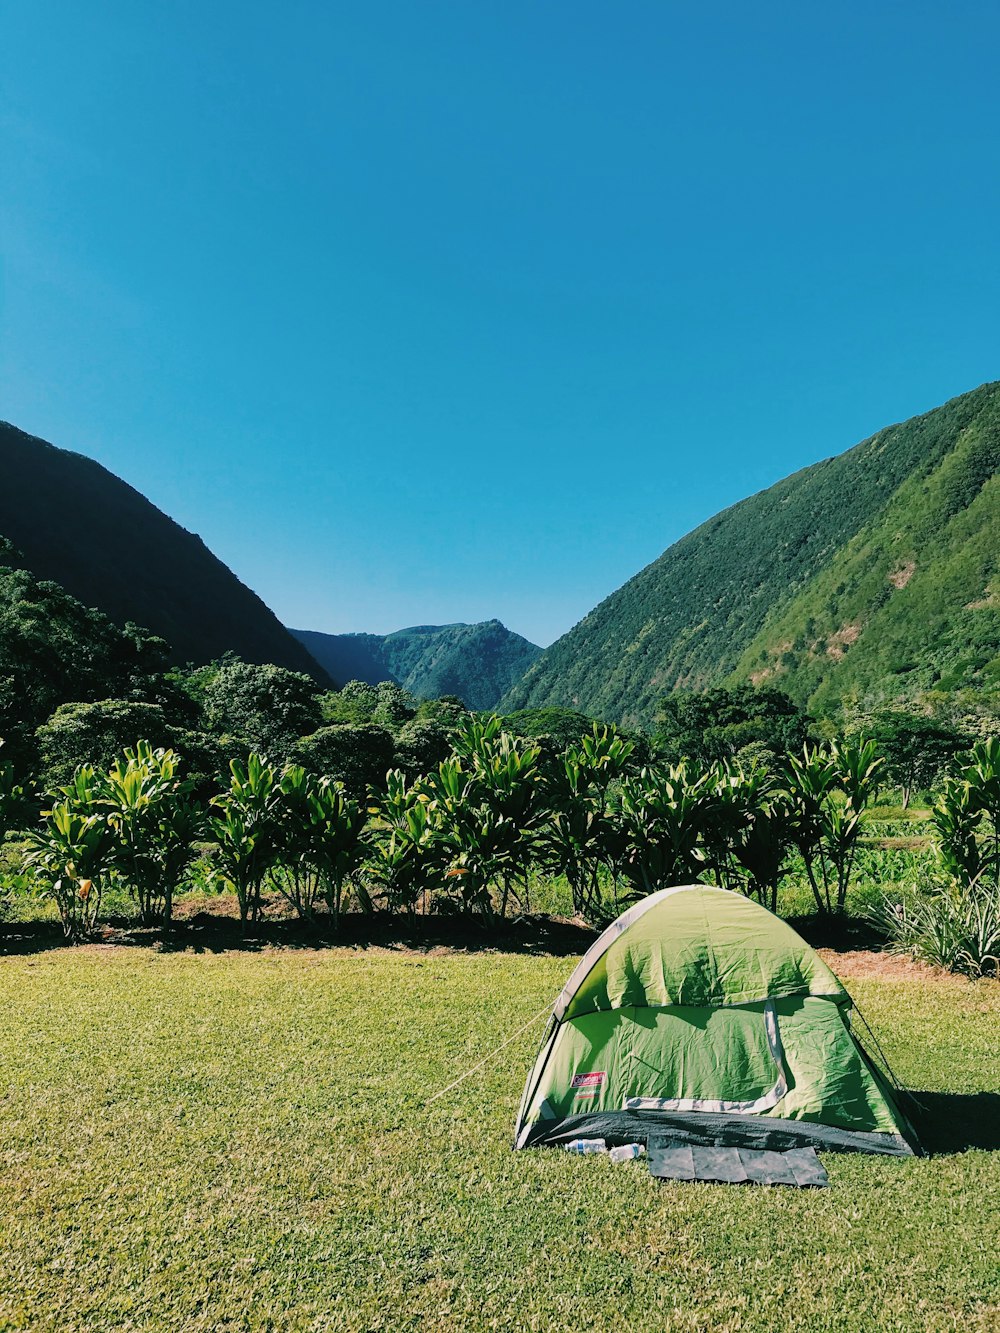 green tent on green grass field near green mountains under blue sky during daytime